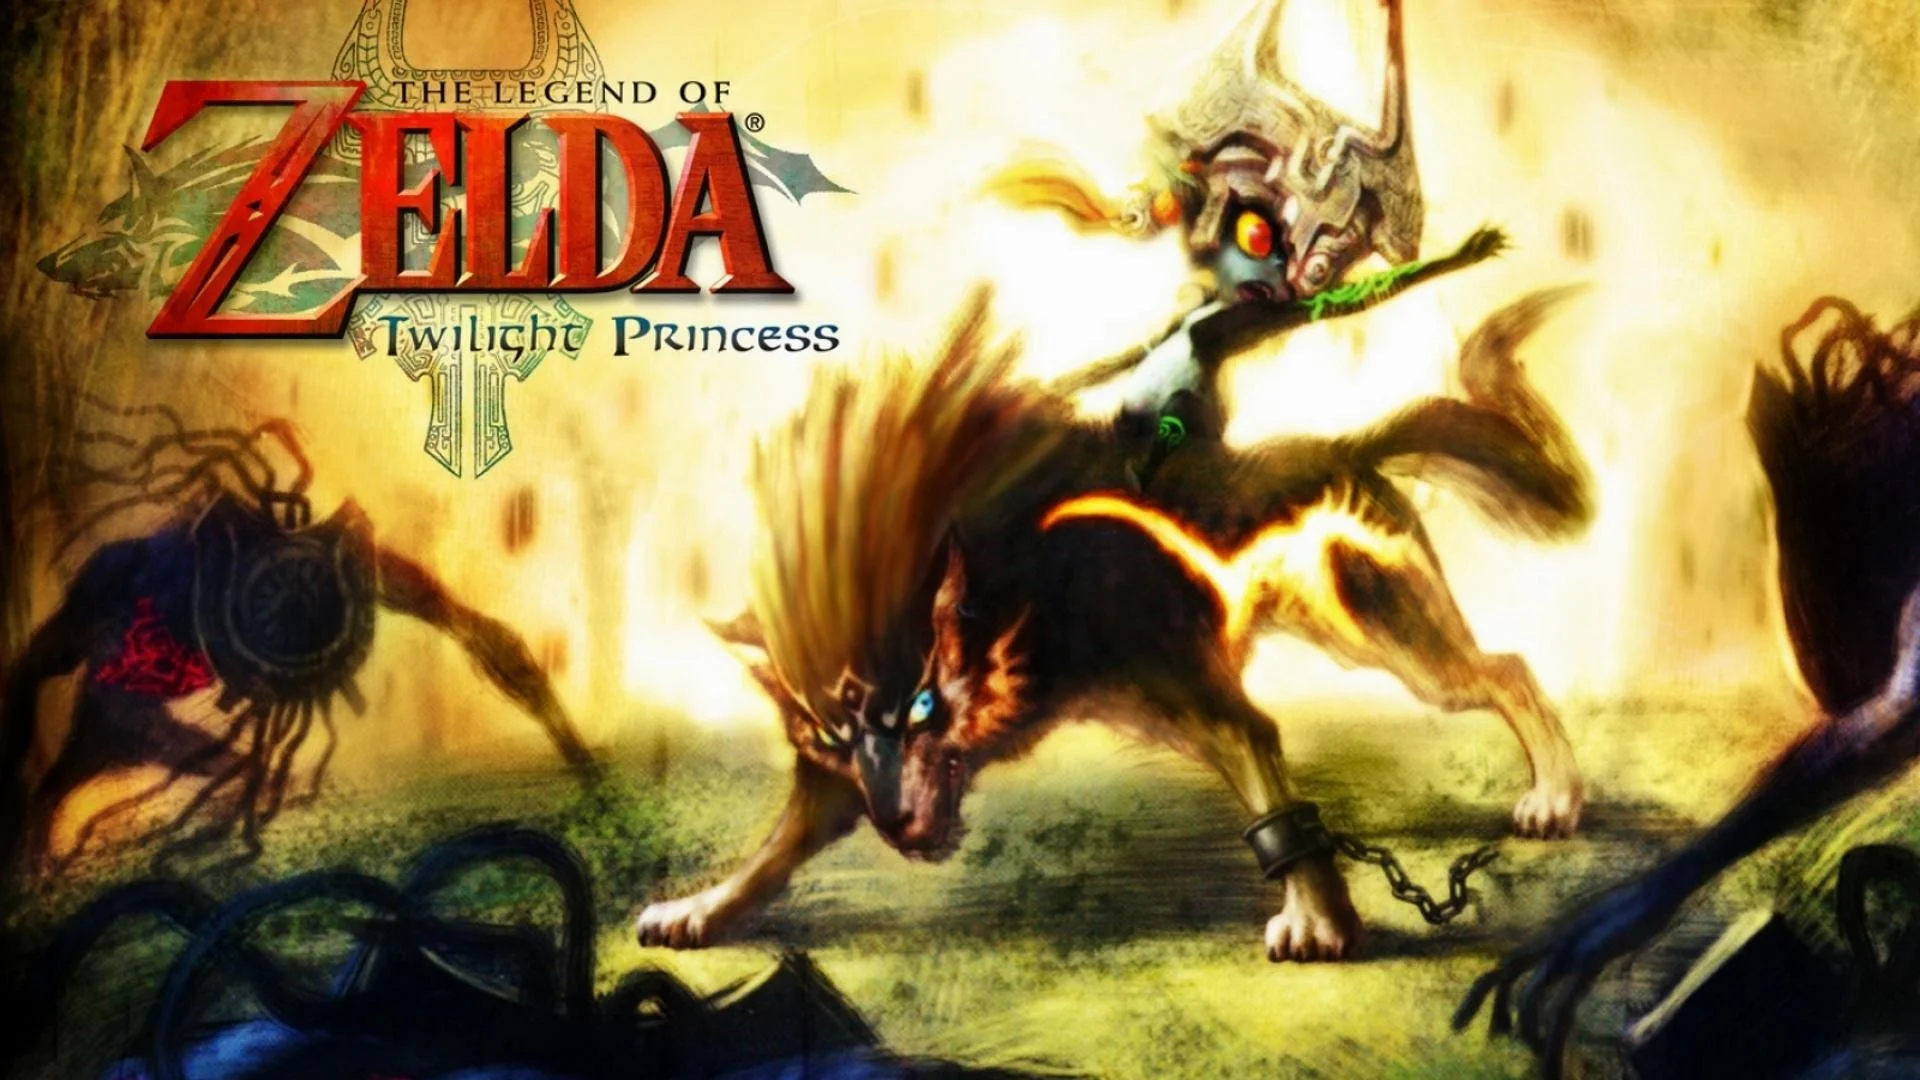 Wallpaper.wiki The Legend Of Zelda Twilight Princess